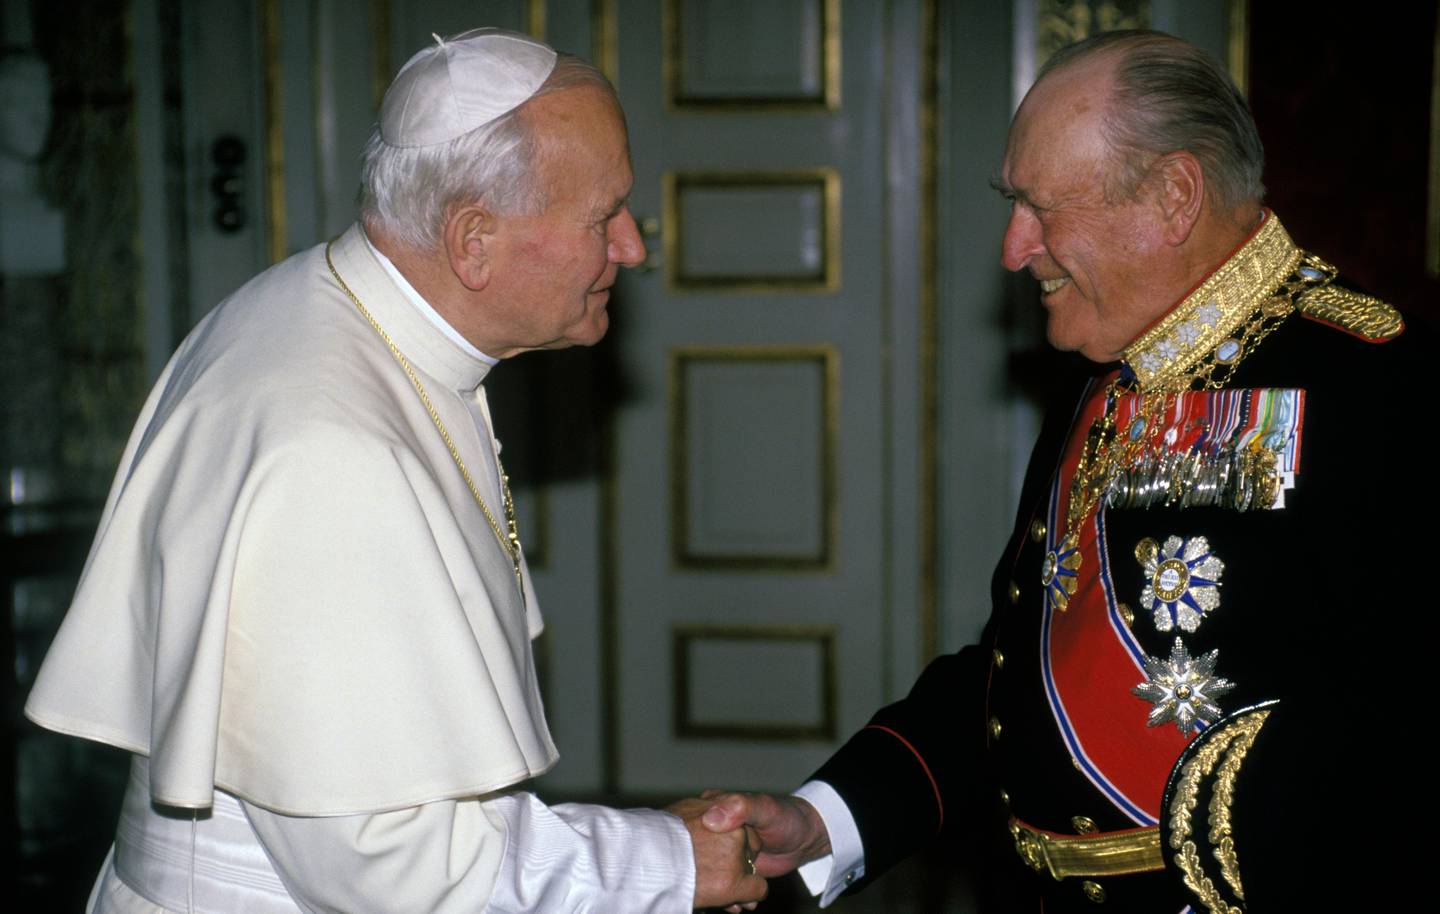 Oslo 1. juni 1989.
Pave Johannes Paul II hilser på kong Olav på slottet i Oslo.
Foto:Knut Falch / SCANPIX